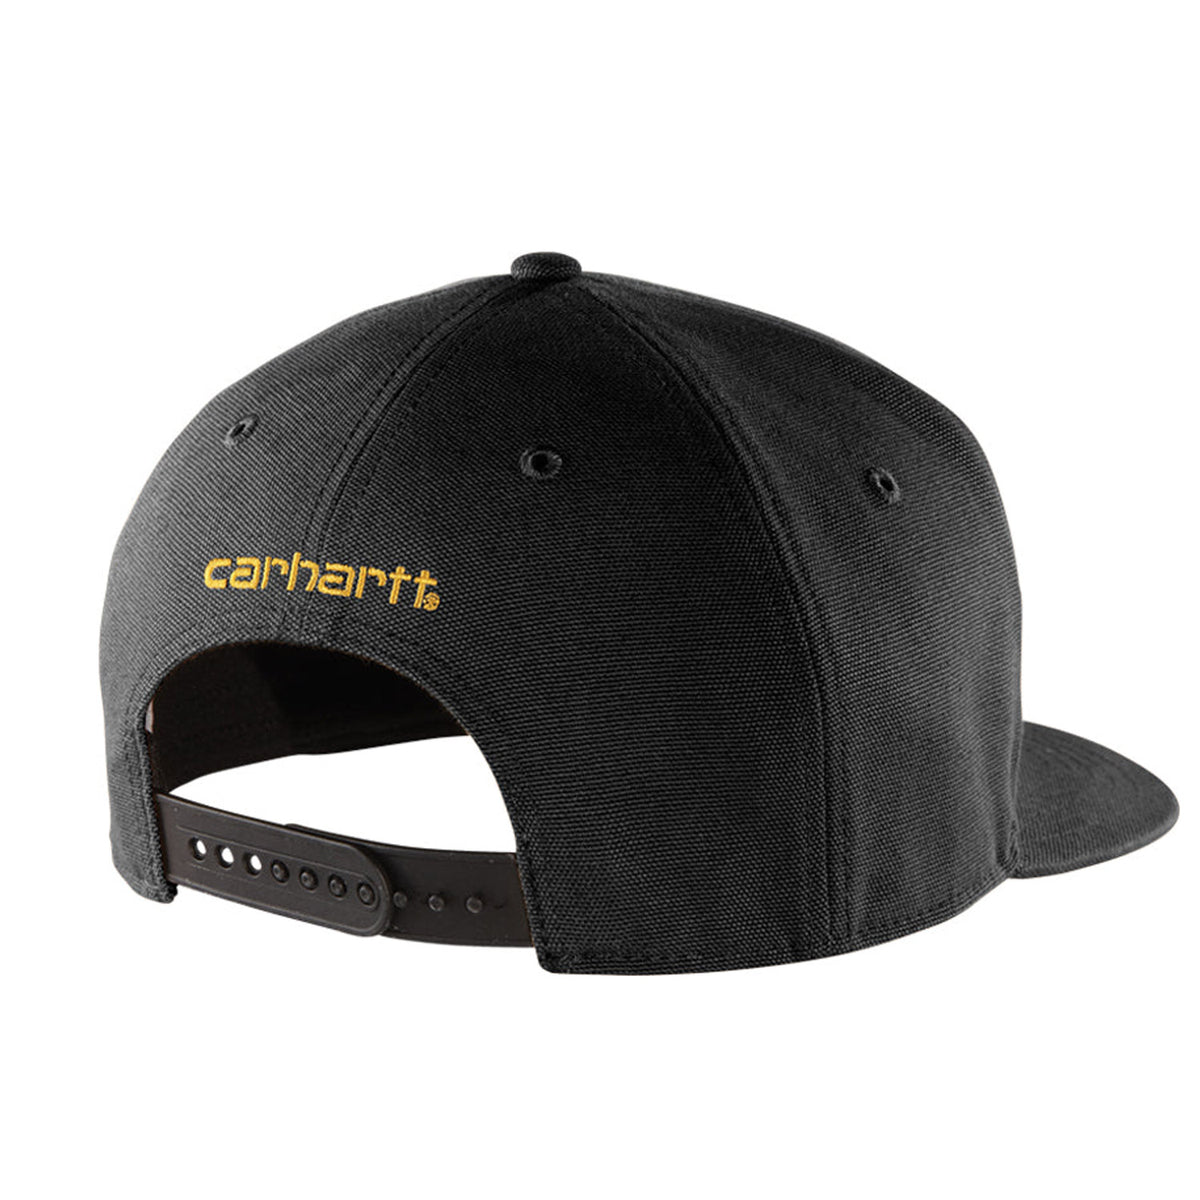 Carhartt Ashland Cap - Work World - Workwear, Work Boots, Safety Gear